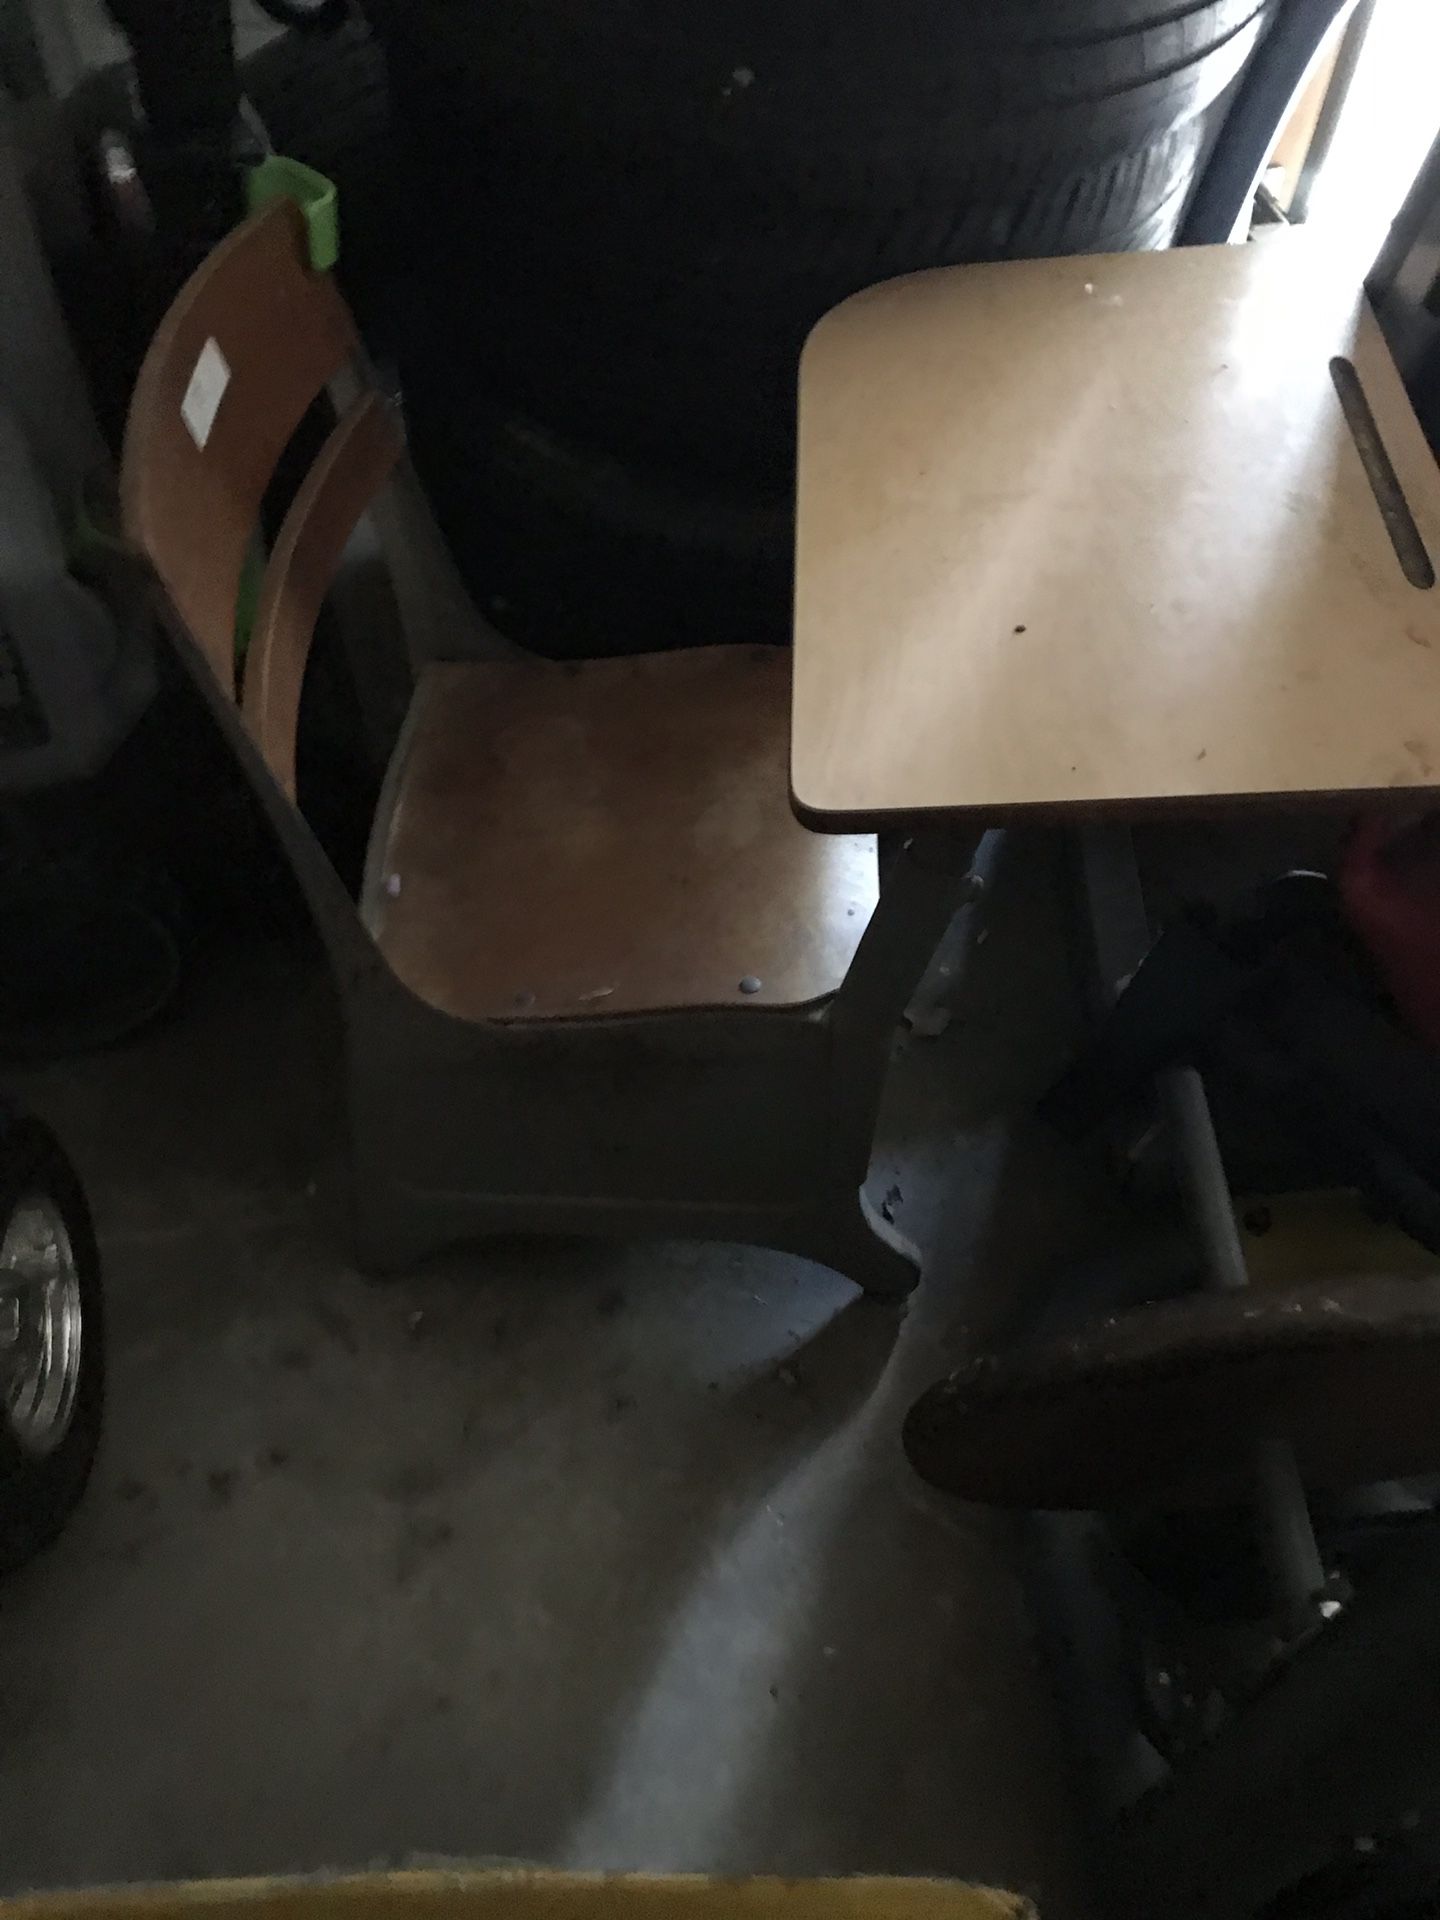 Old school desk